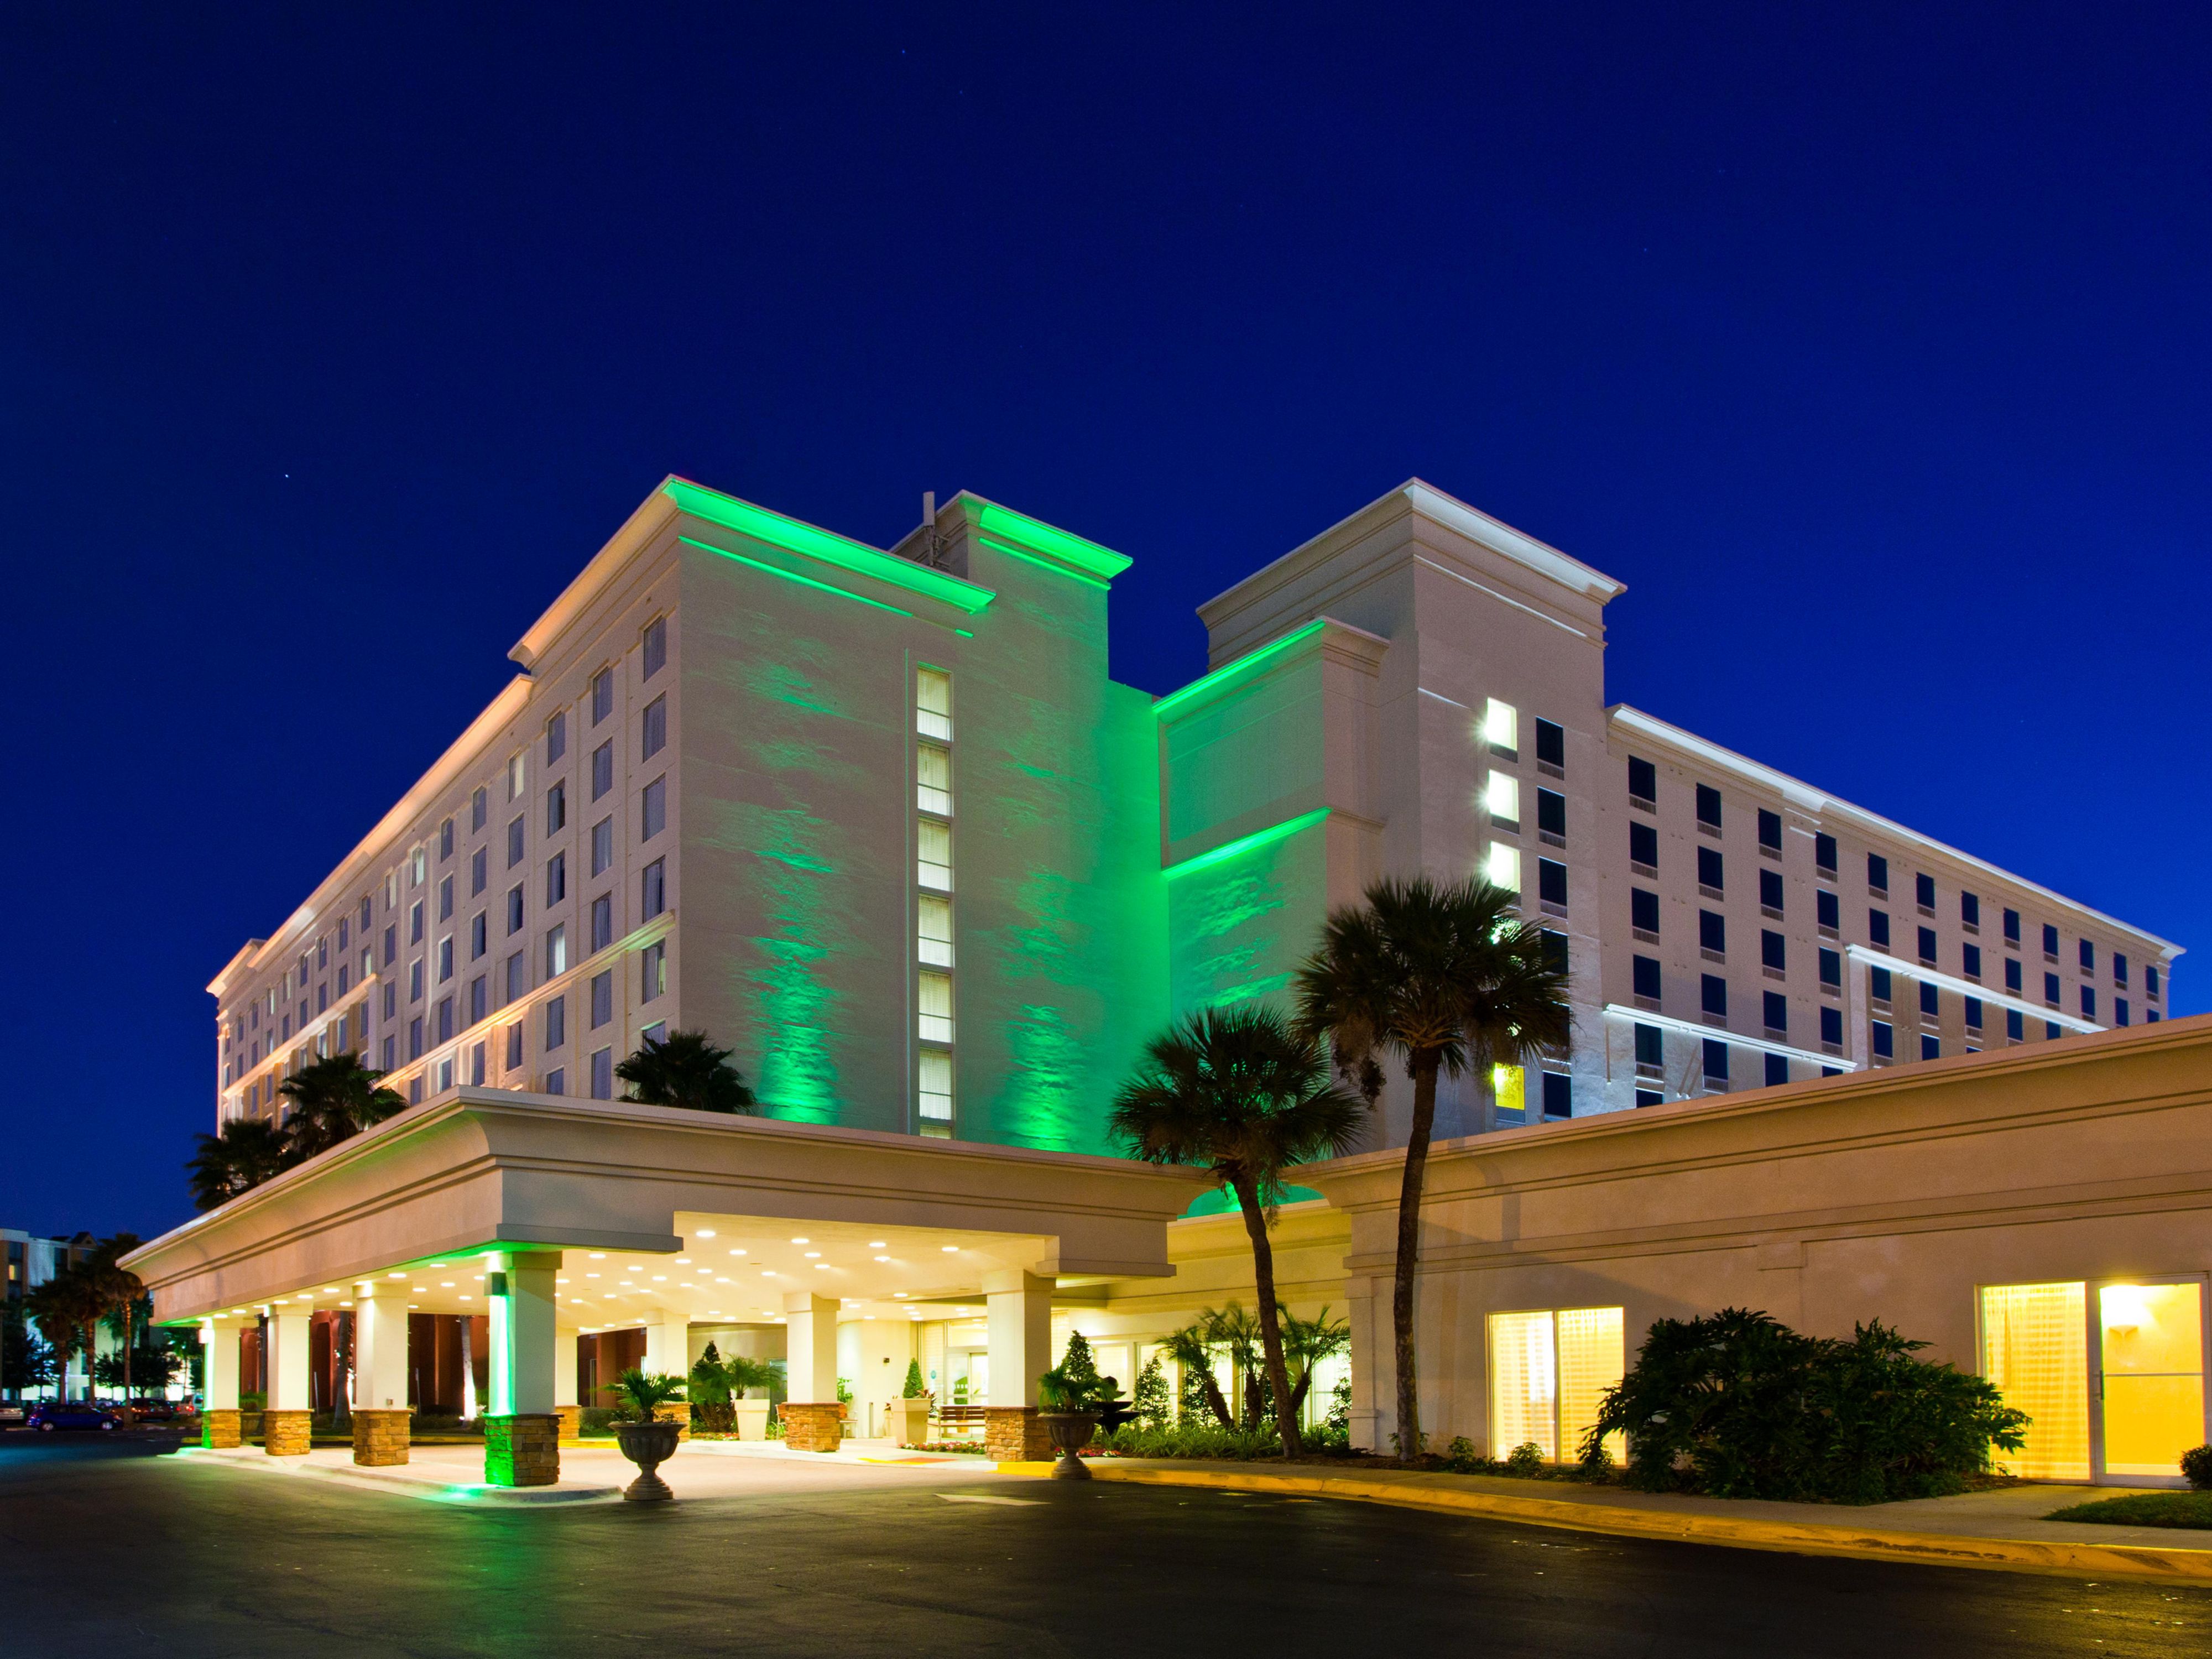 Holiday Inn Hotel - Homecare24